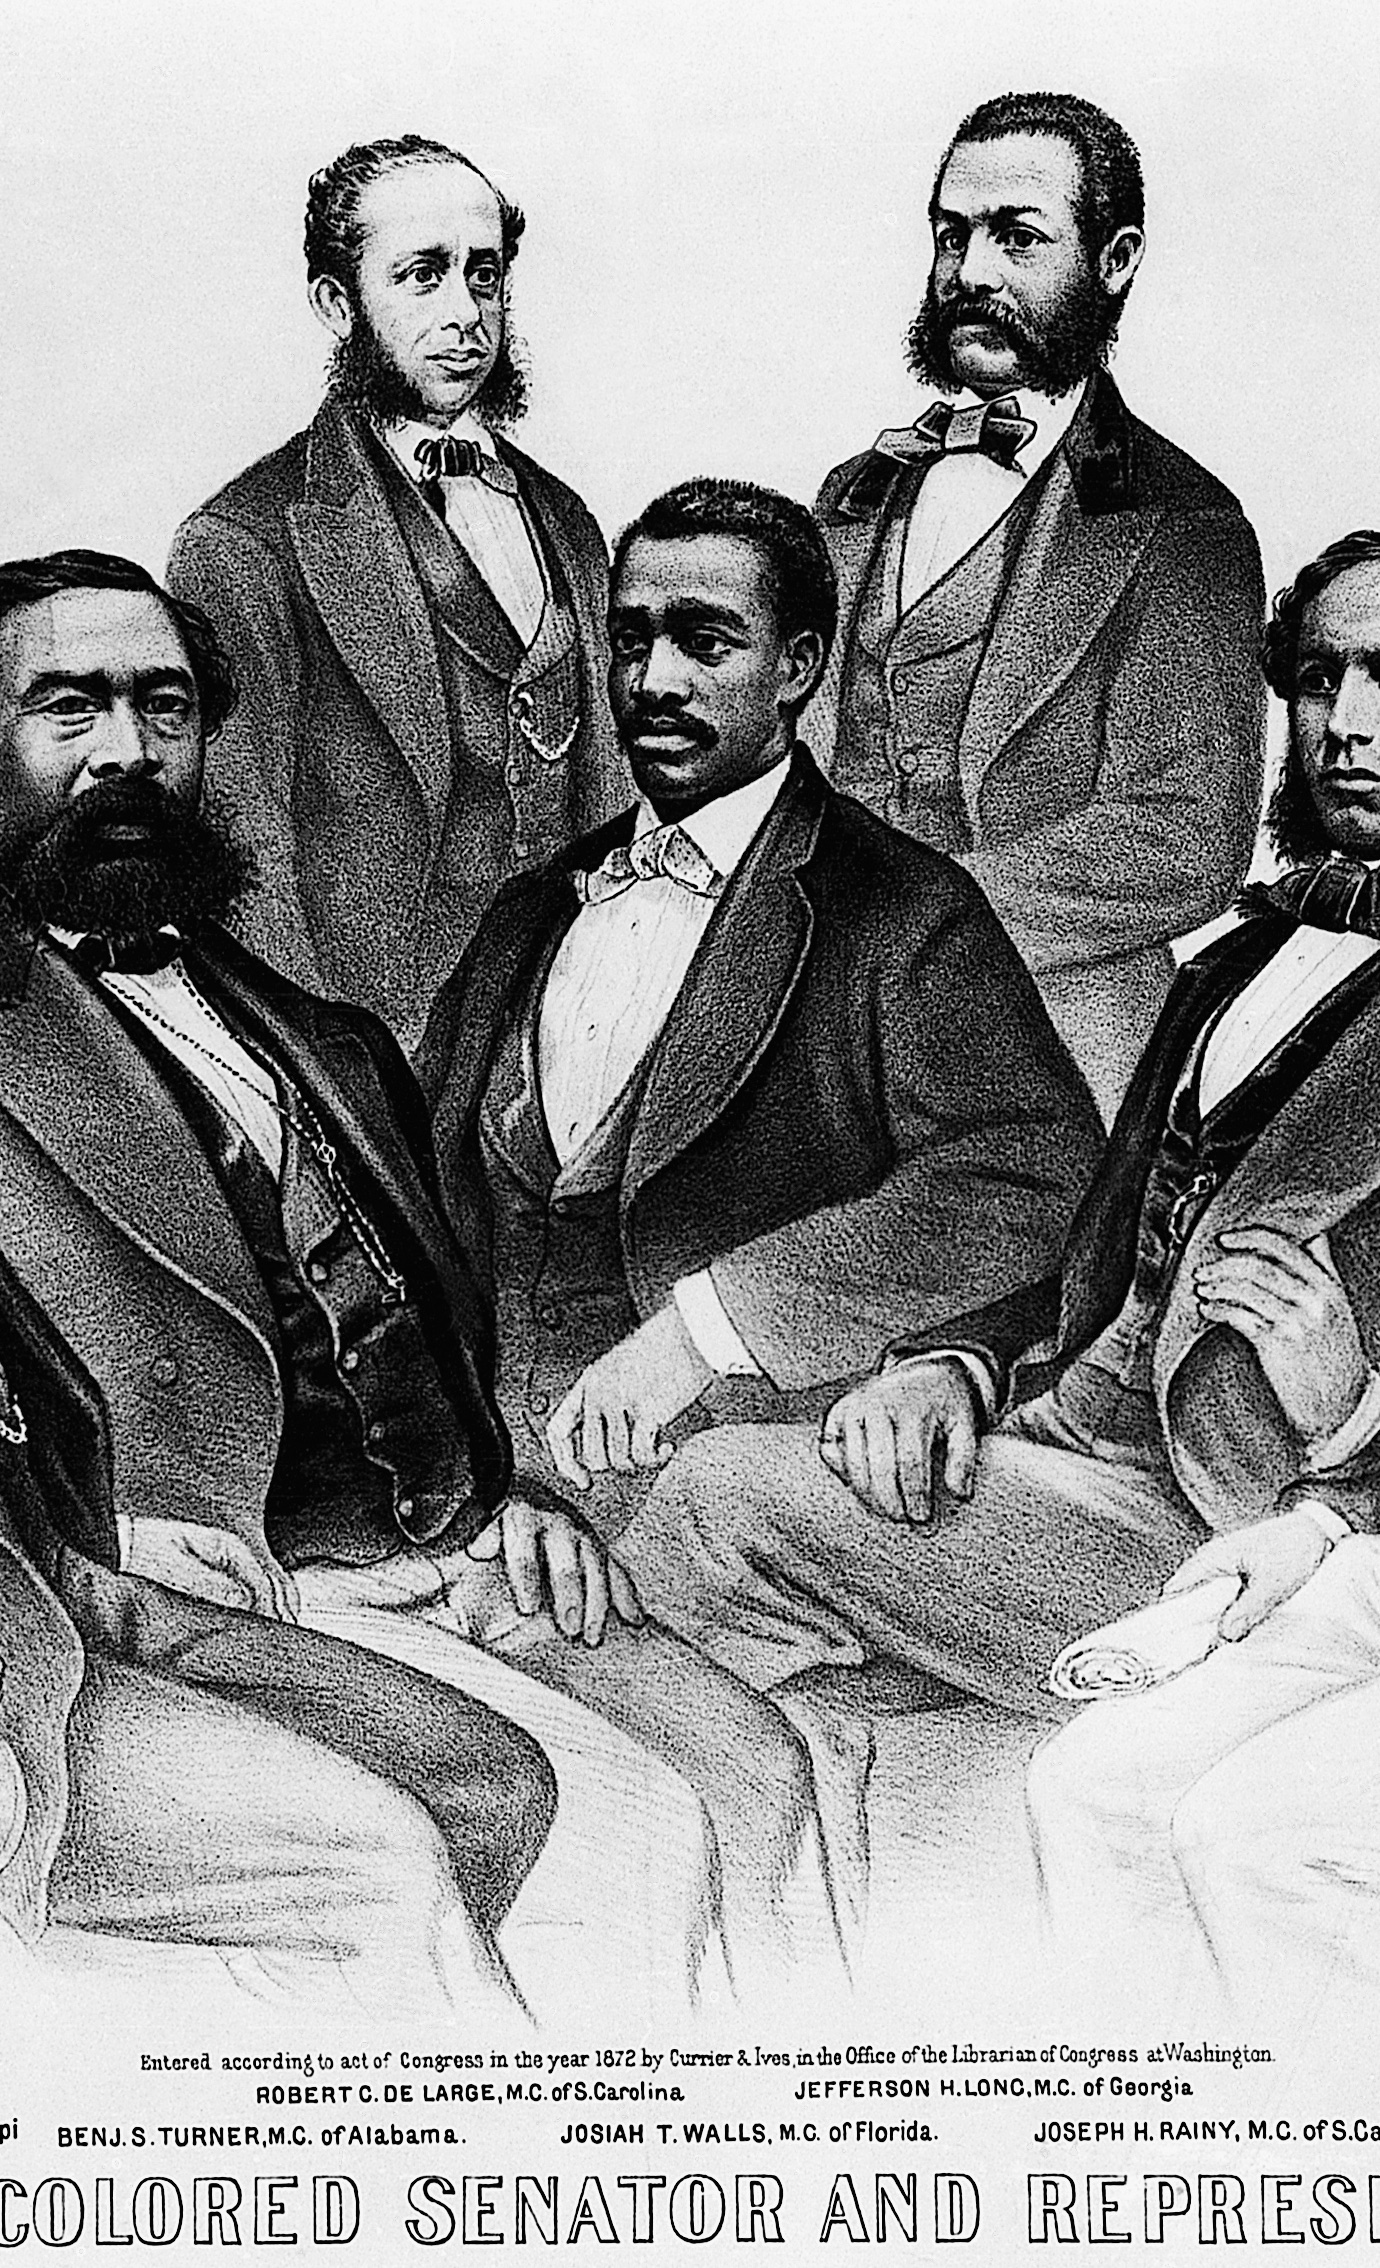 The First Black Senator and Representatives